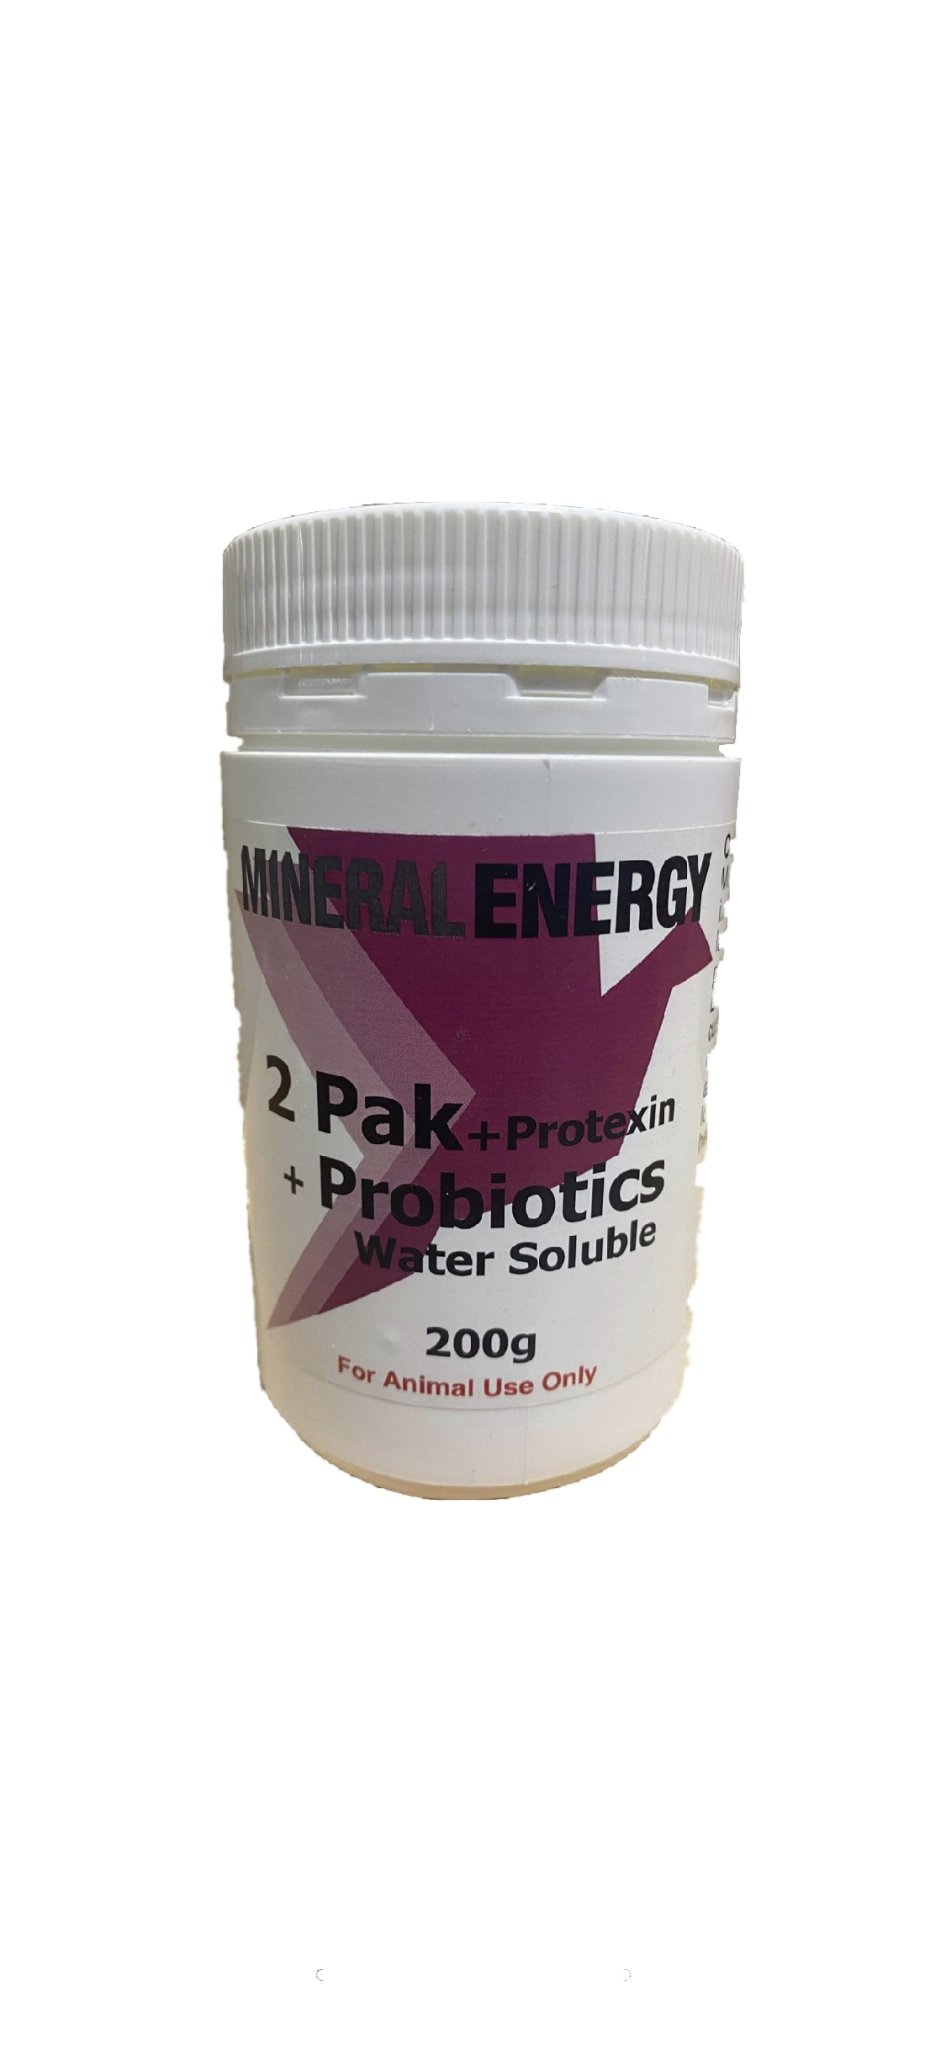 Mineral Energy Probiotic 2 Pak 200g - Woonona Petfood & Produce